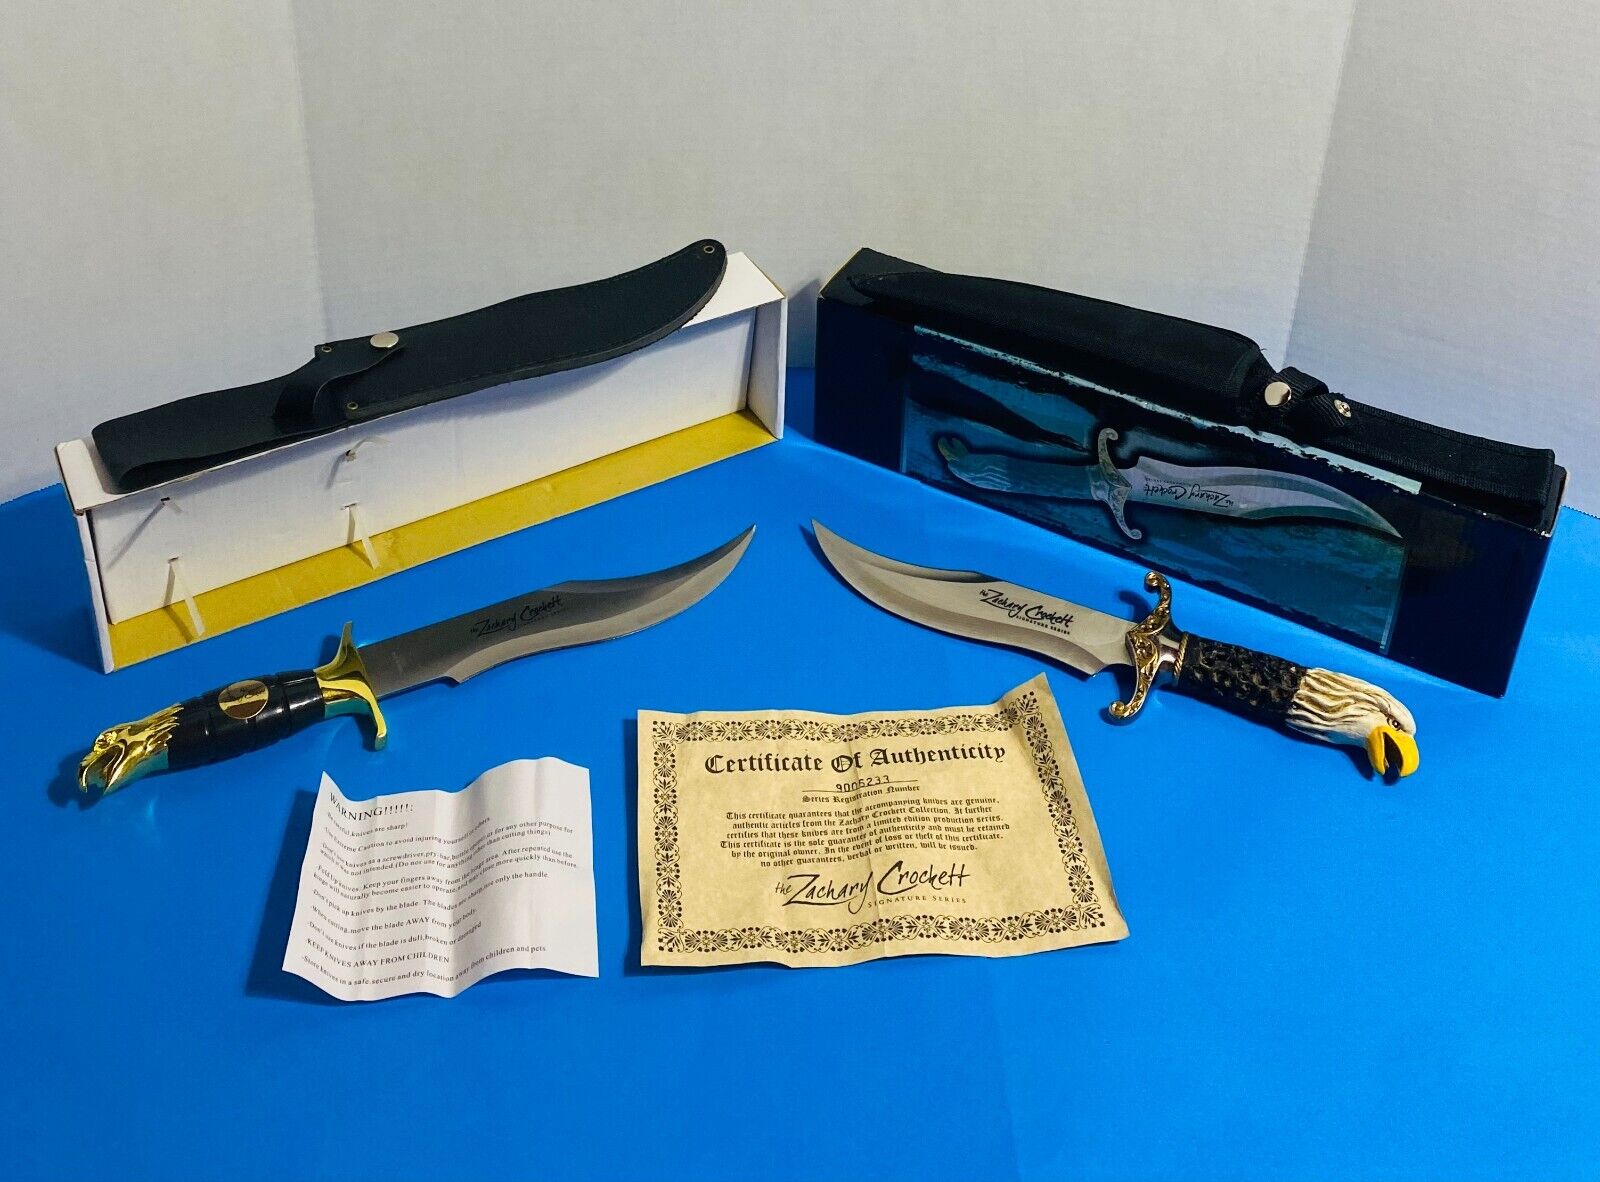 Two Estate Sale Zachary Crockett Signature Series Hunting Knife Brand Eagles Set